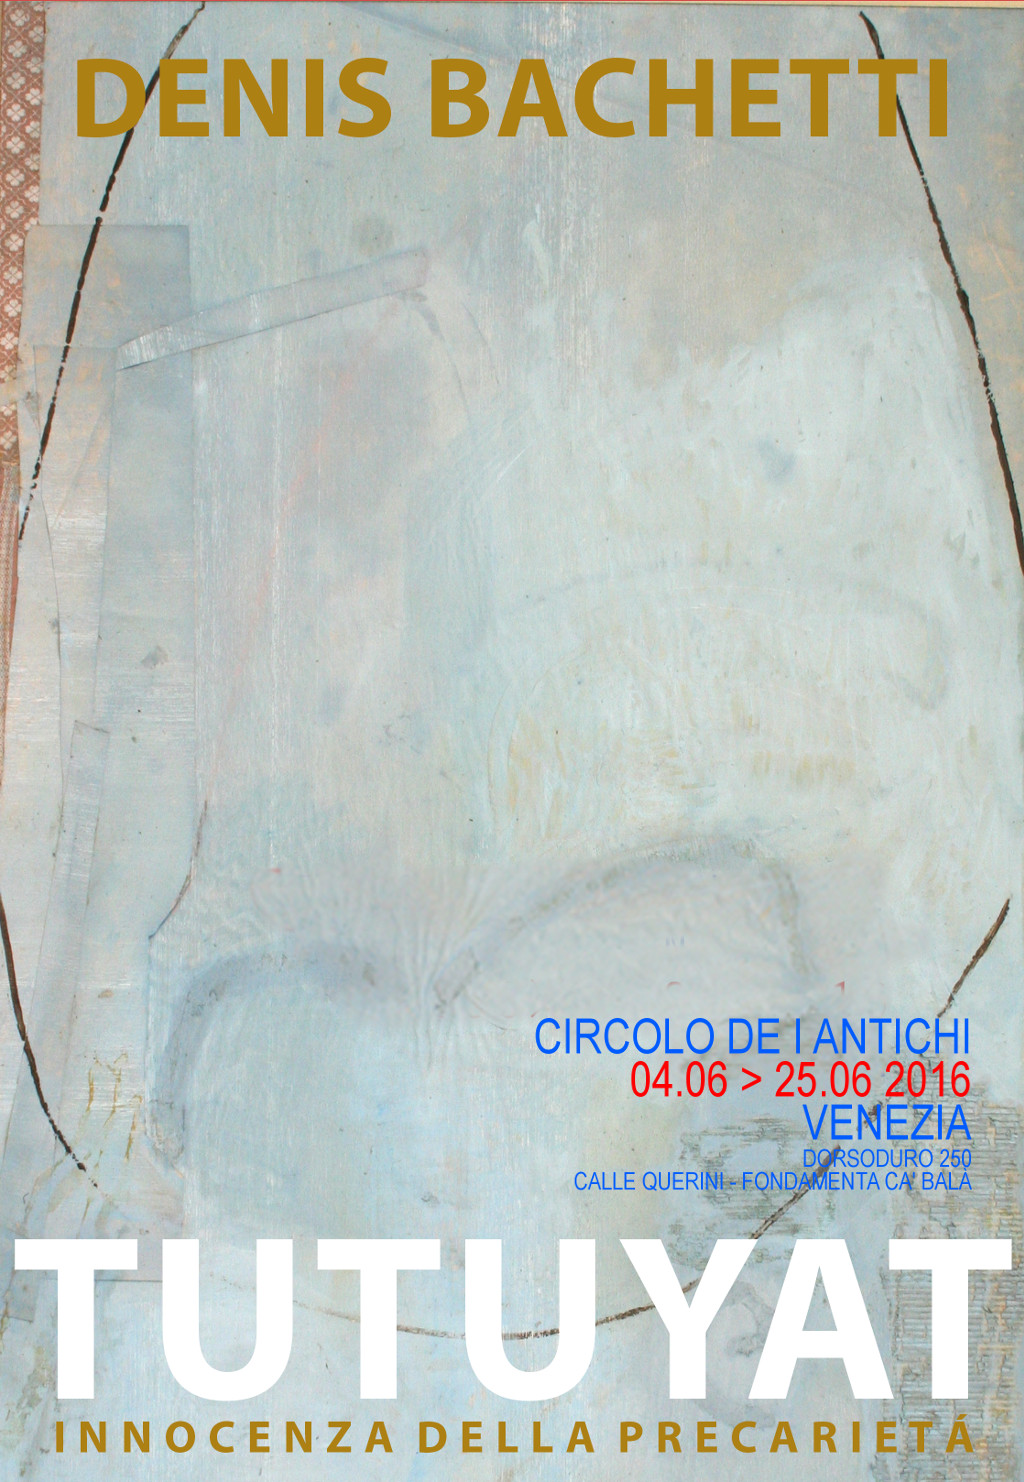 CdIAV - Artisti a Venezia: Denis Bachetti, Tutuyat - dal 4 al 25 giugno 2016 - LOCANDINA alternativa